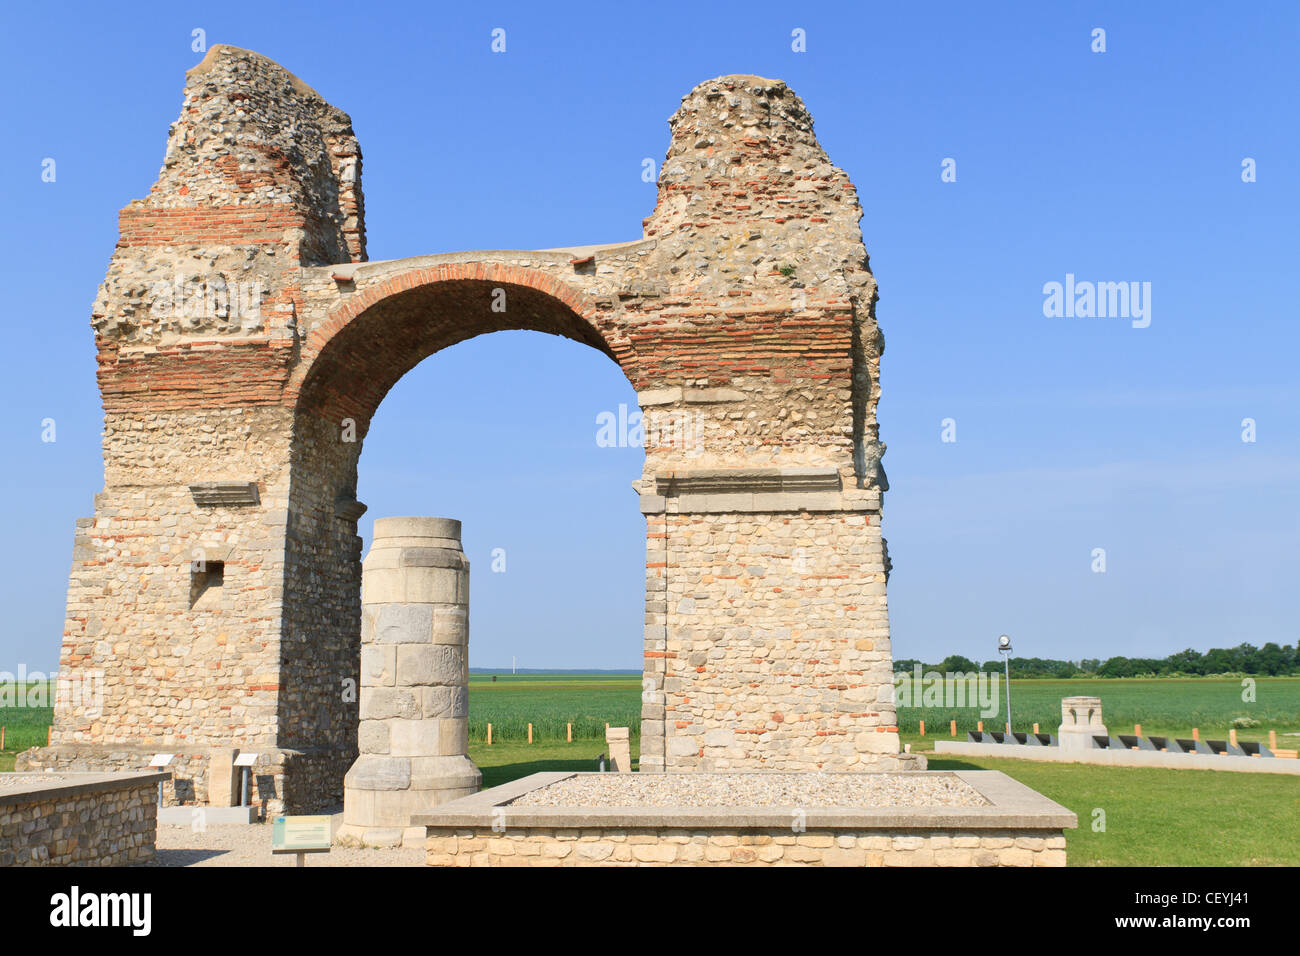 Old Roman City Gate (Heidentor) at Carnuntum Archeological Site, Austria Stock Photo